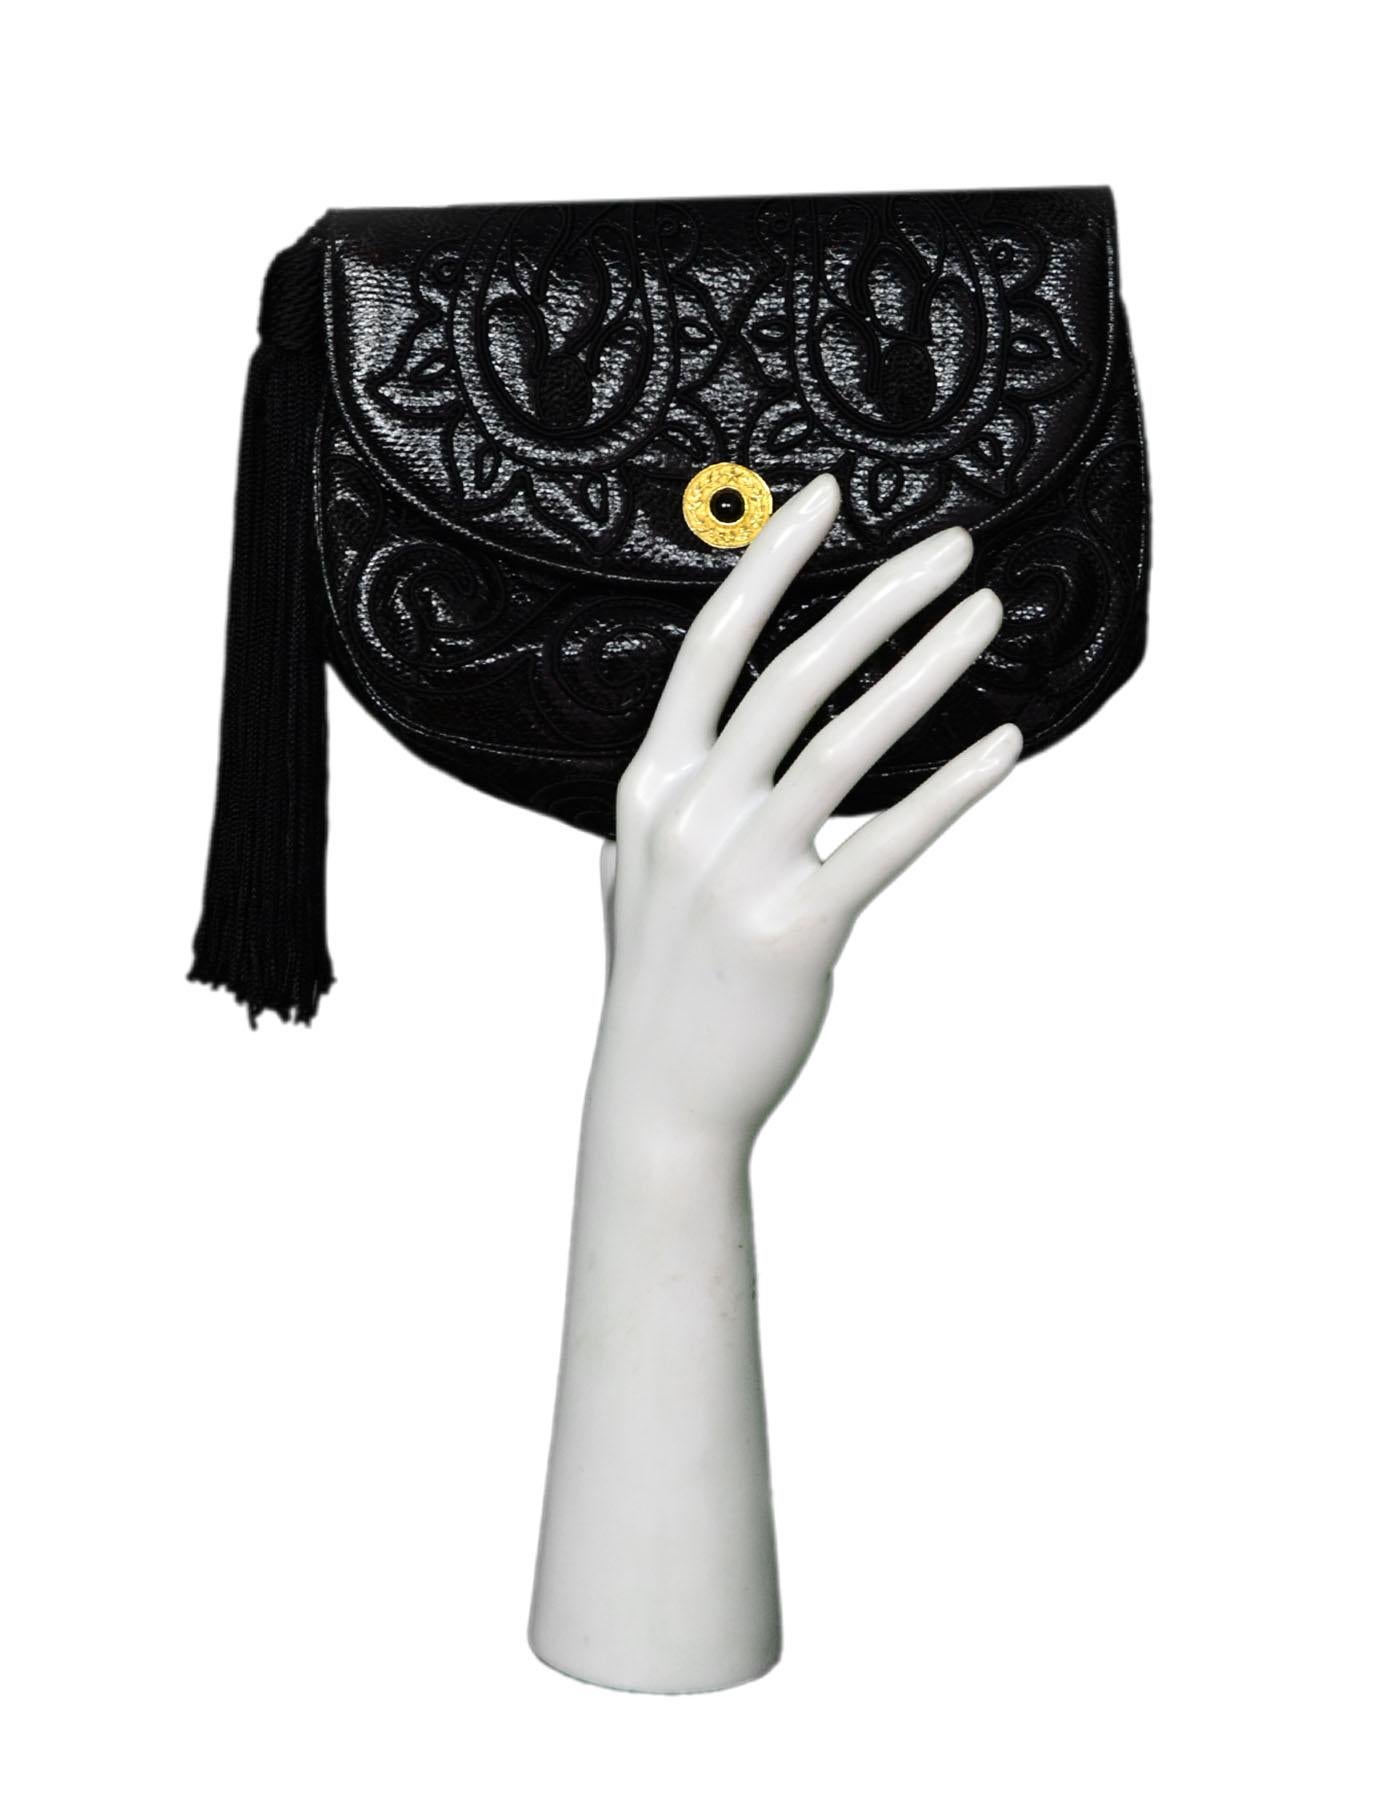  Judith Leiber Vintage Embroidered Black Lizard Clutch/ Crossbody Bag 6